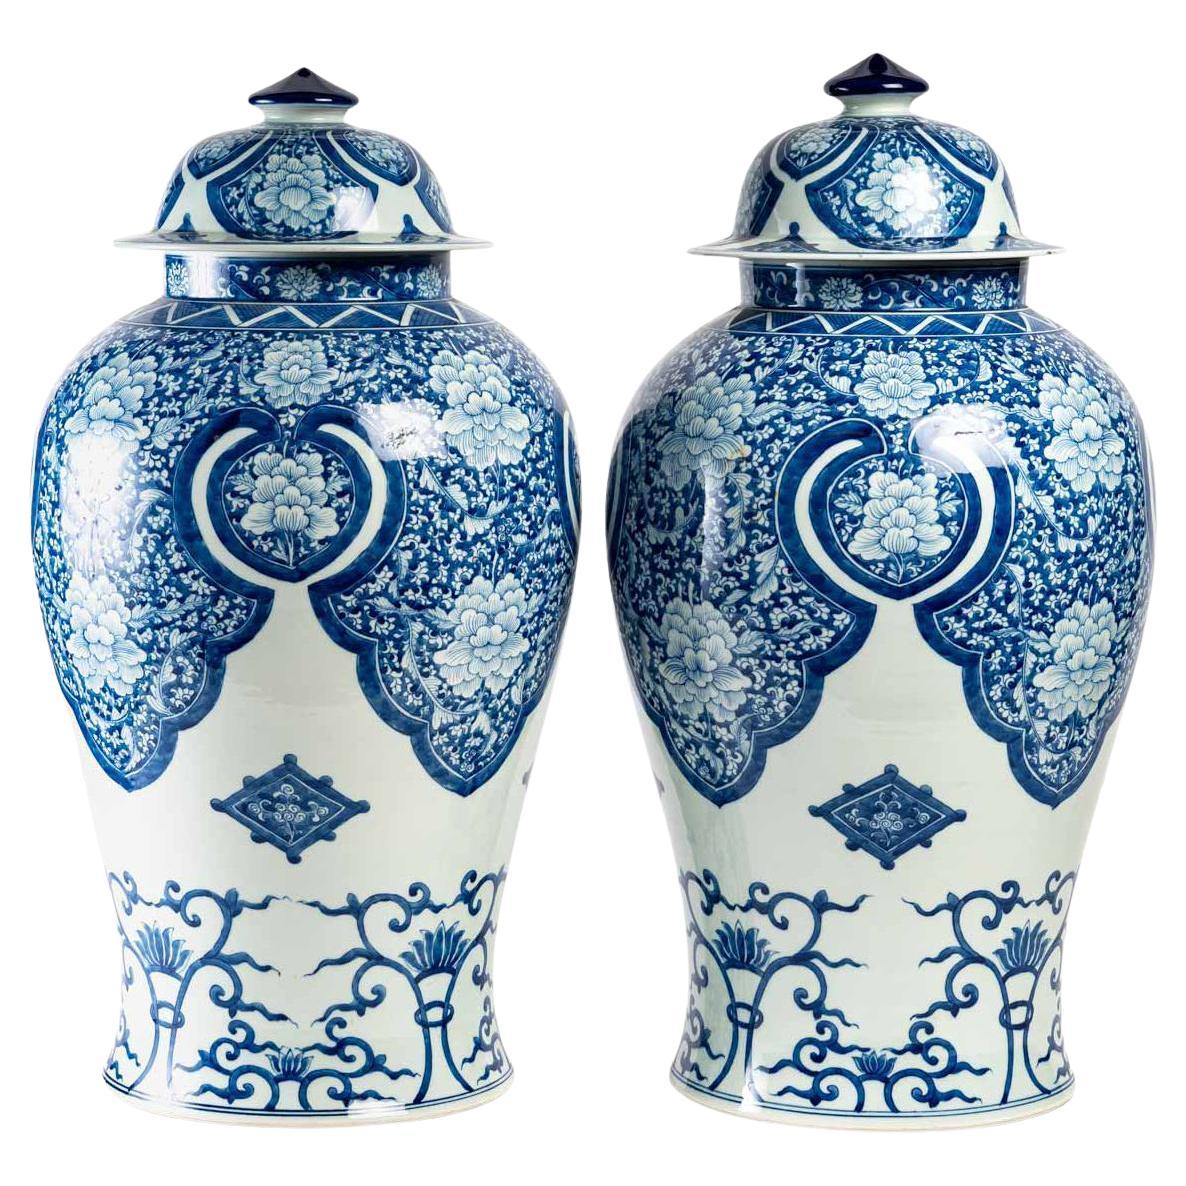 Pair of Porcelain Covered Vases